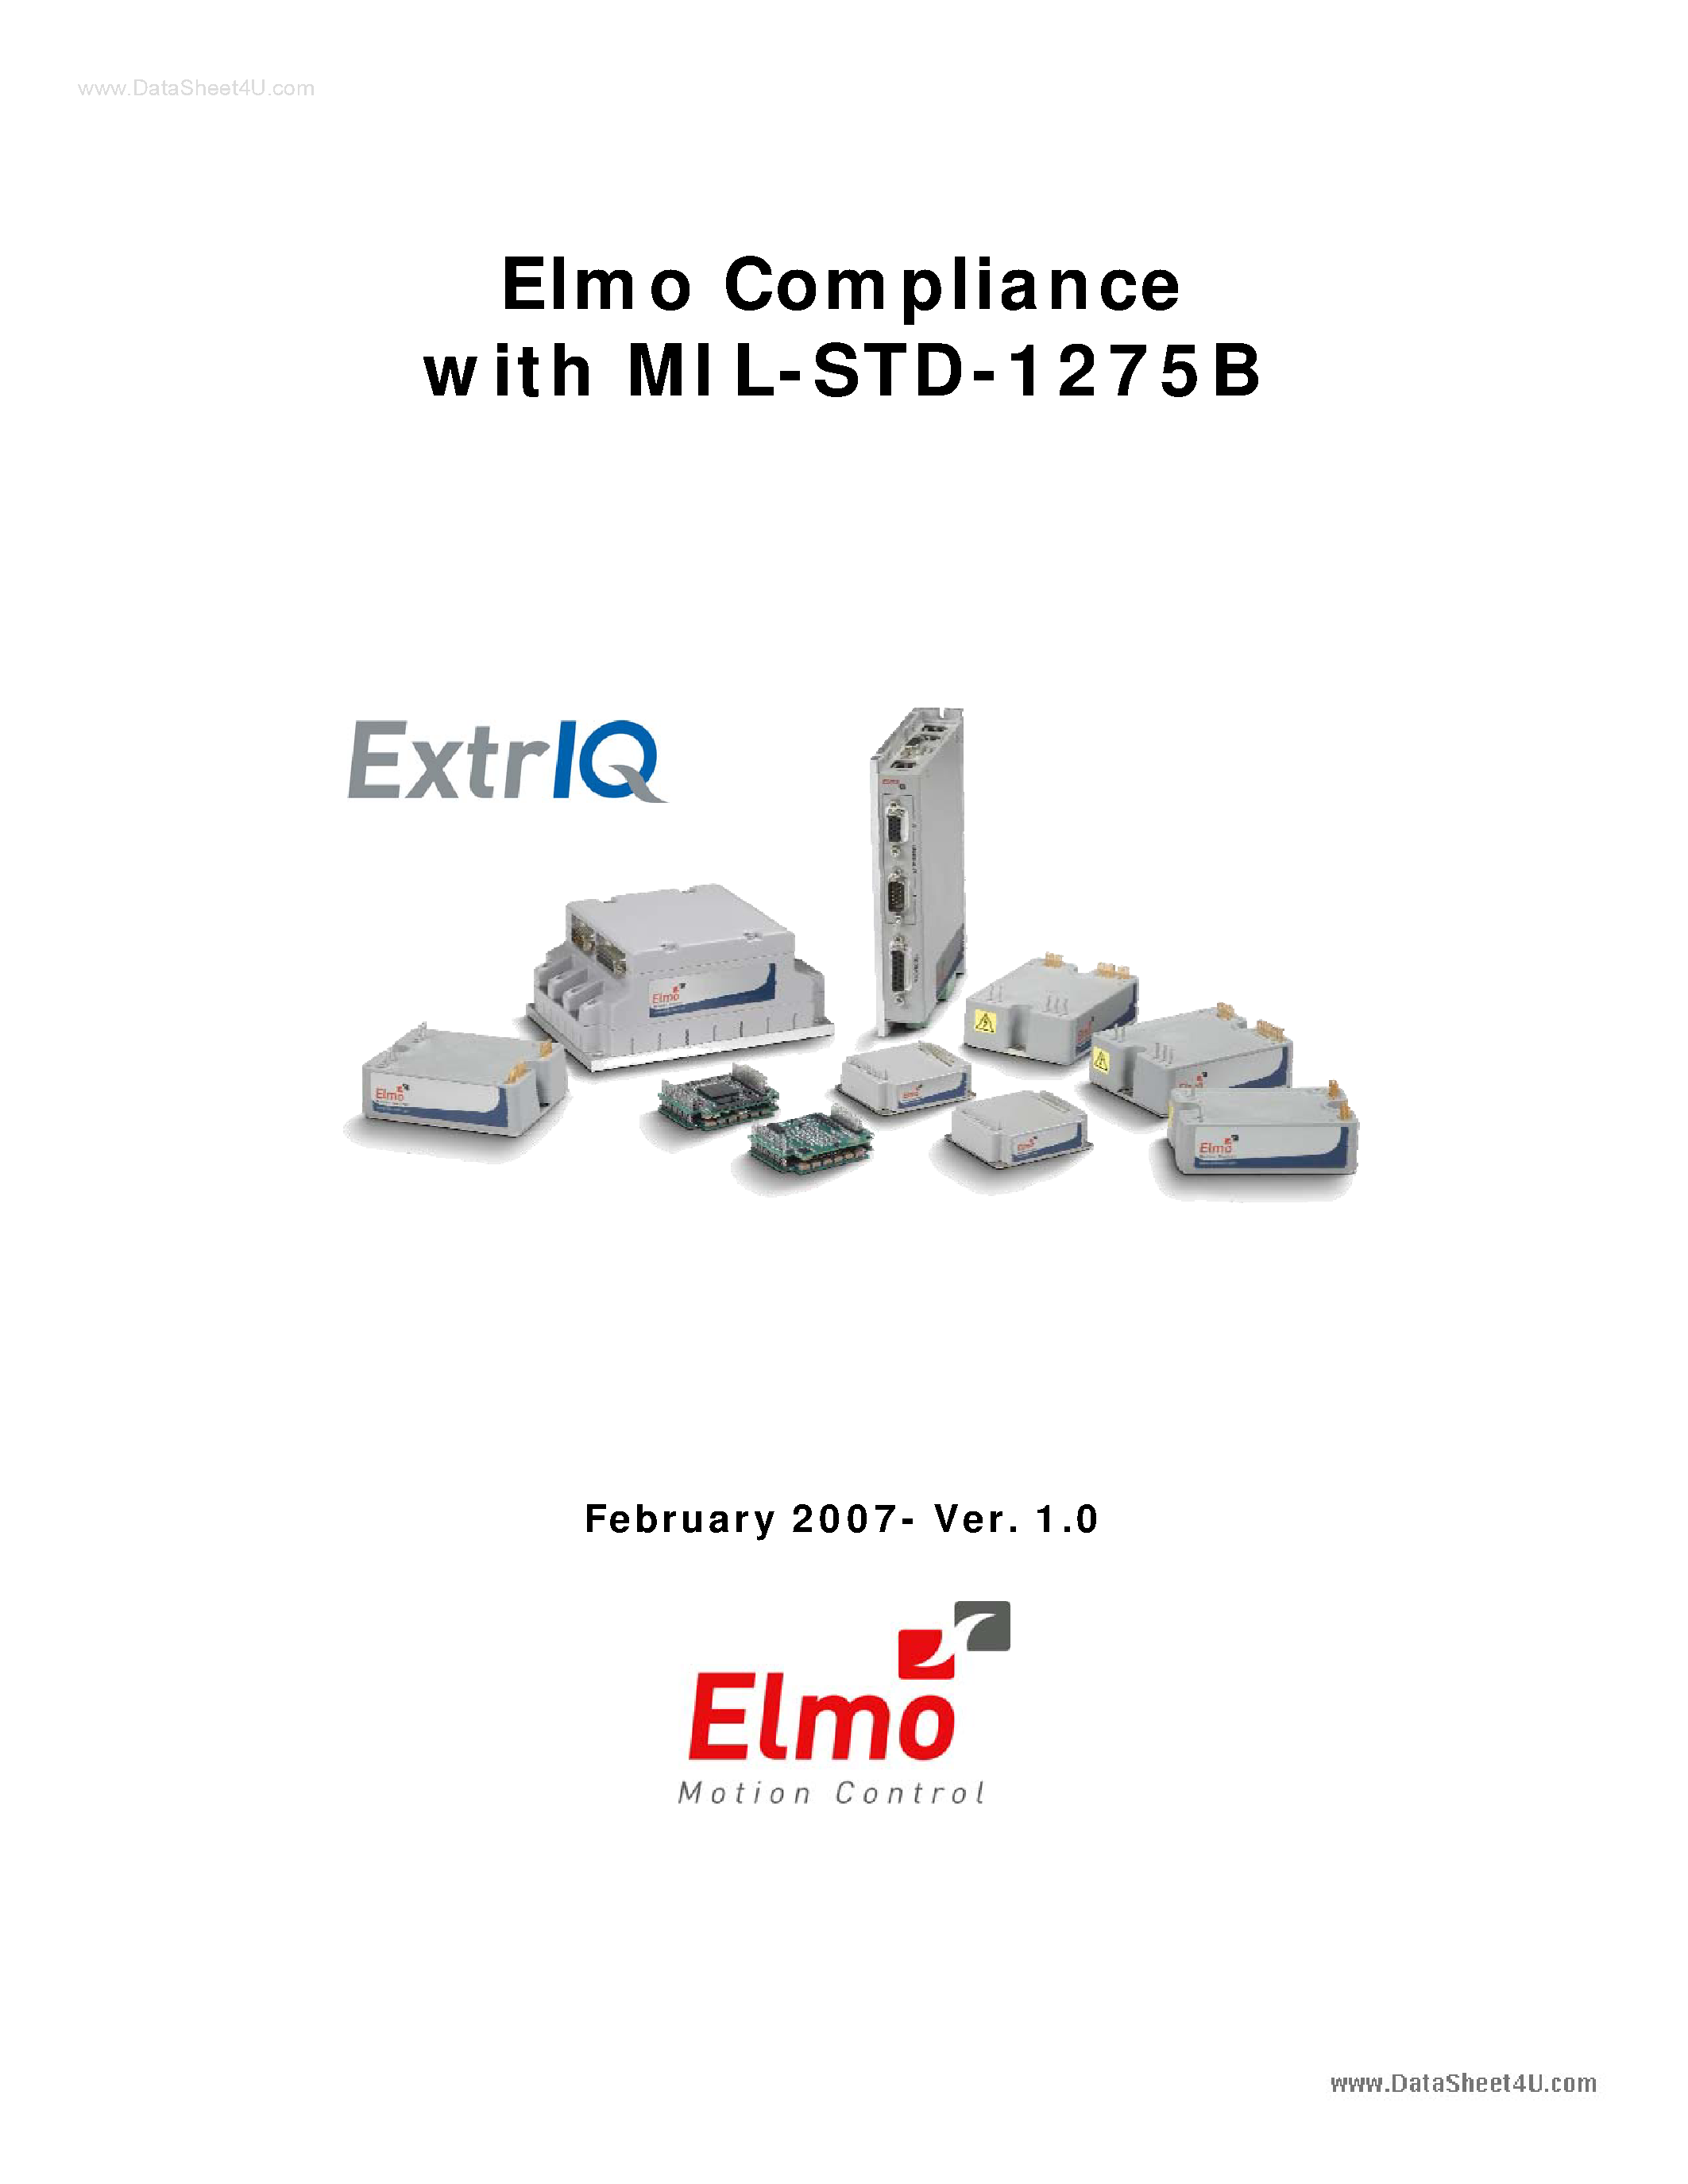 Datasheet MIL-STD-1275B - Elmo Compliance page 1